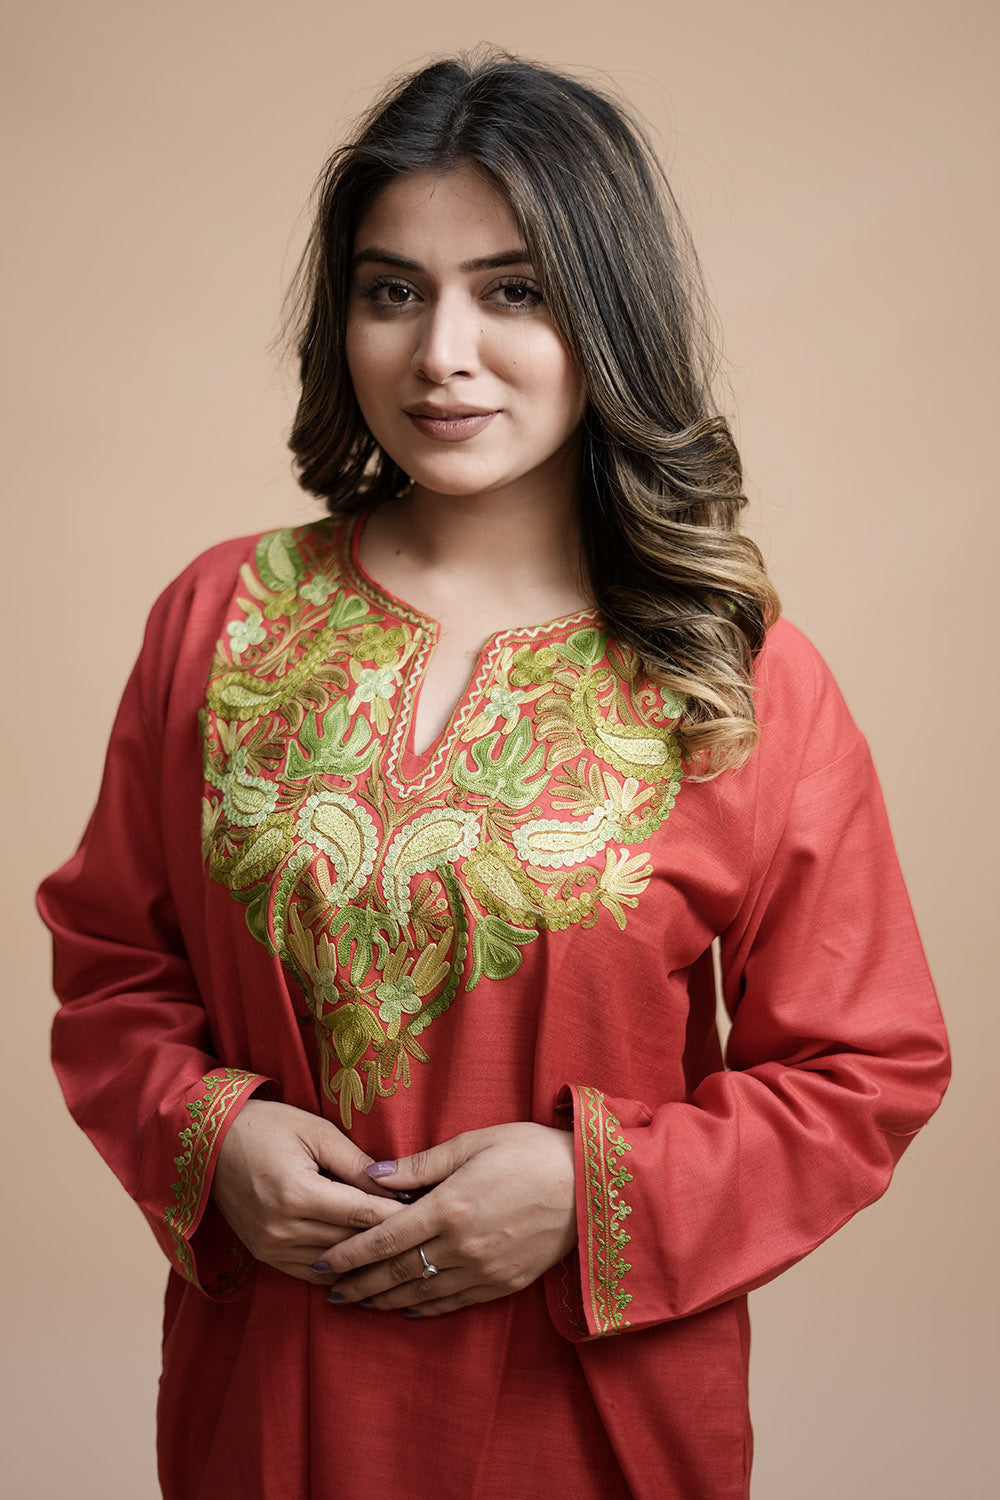 Red Colour Cotton Kurti With Kashmiri Motifs Latest Fashion